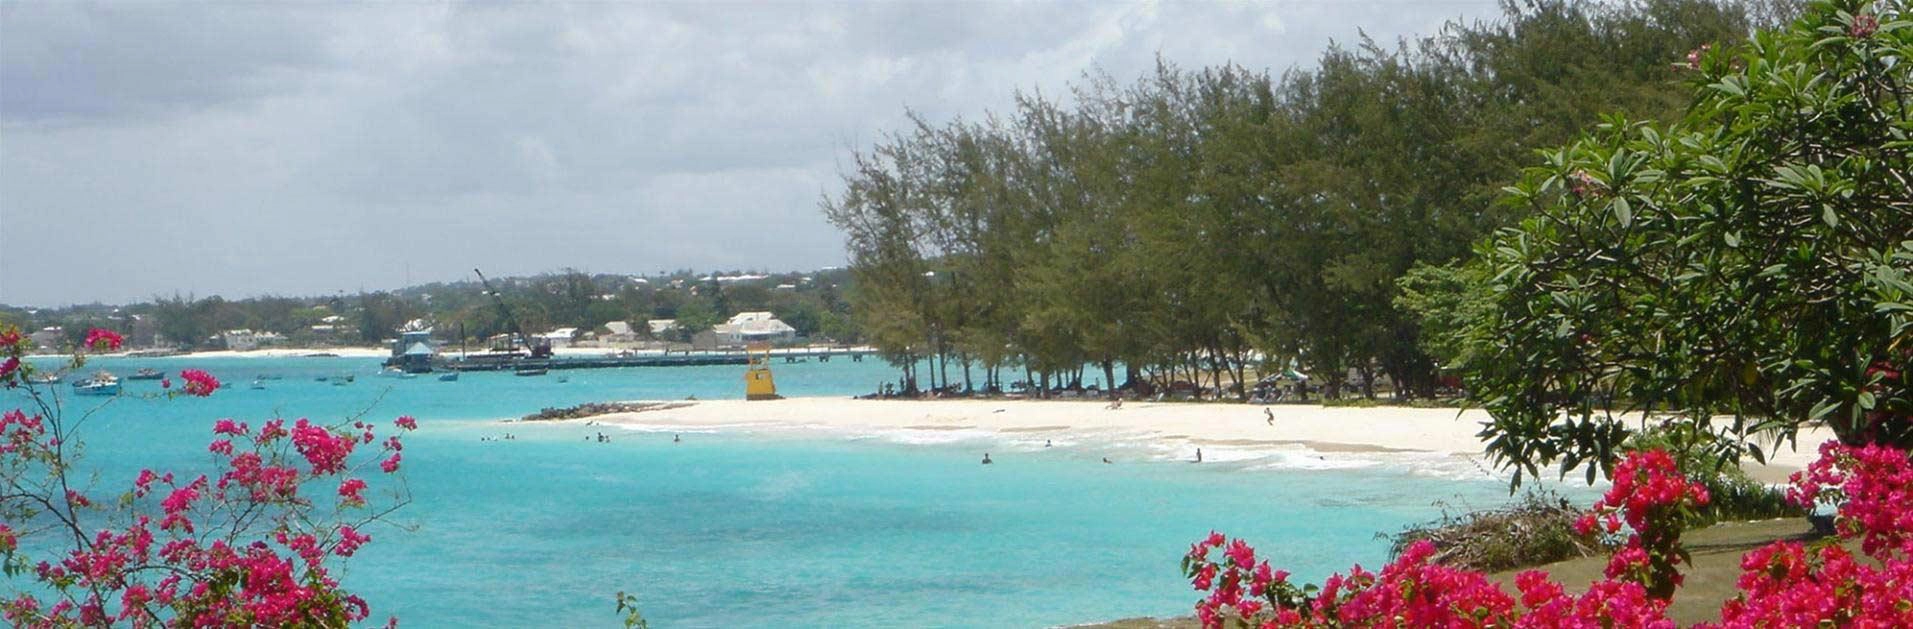  Enterprise  strand - Barbados